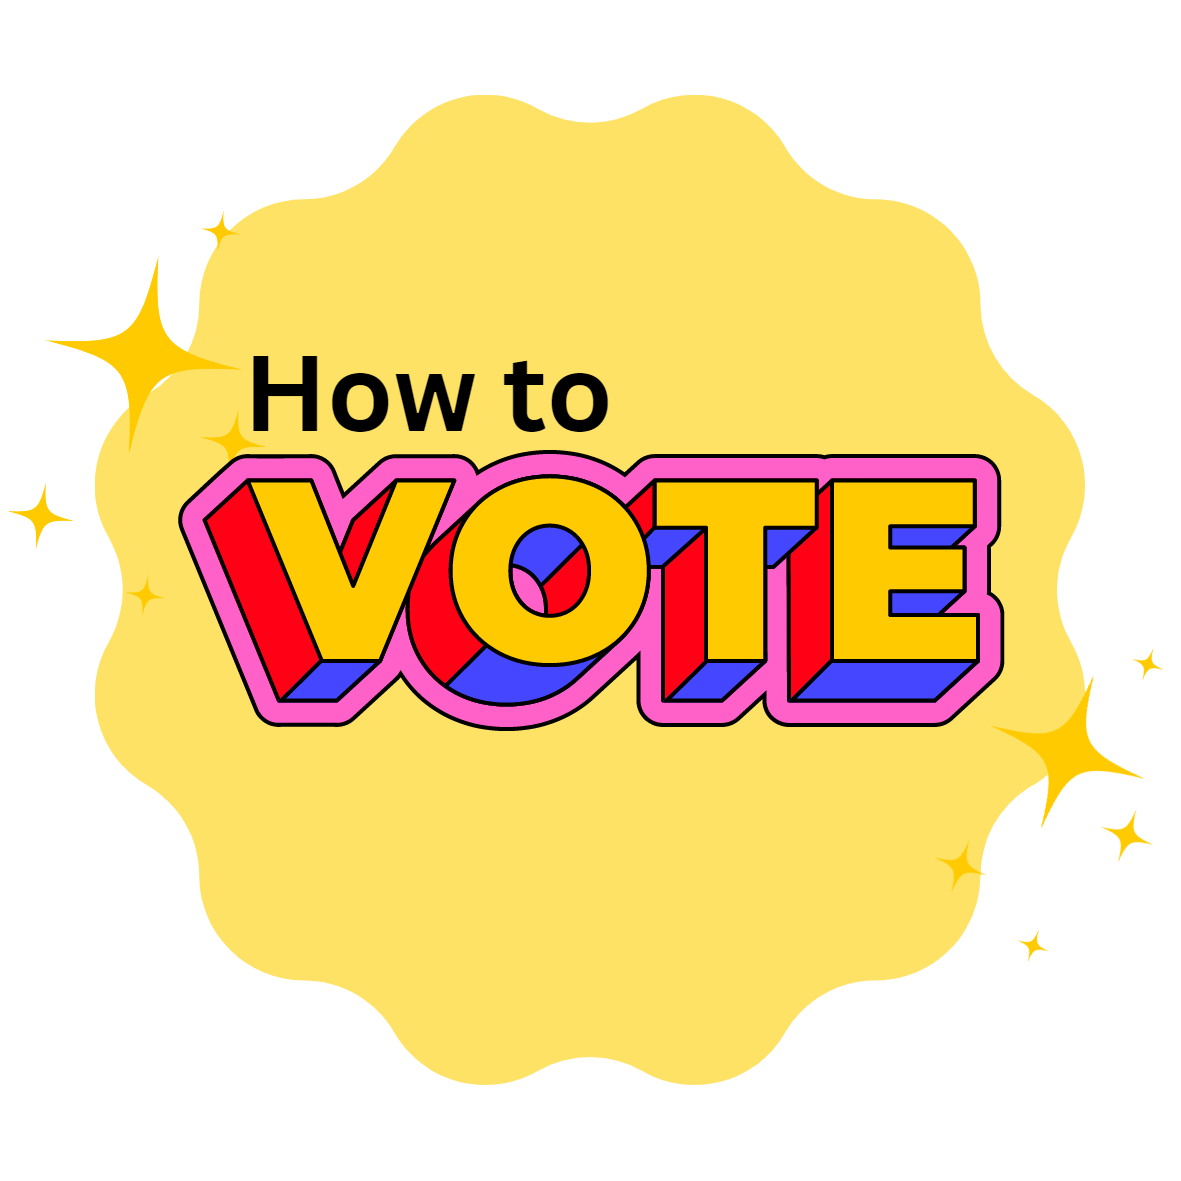 Voter Resources